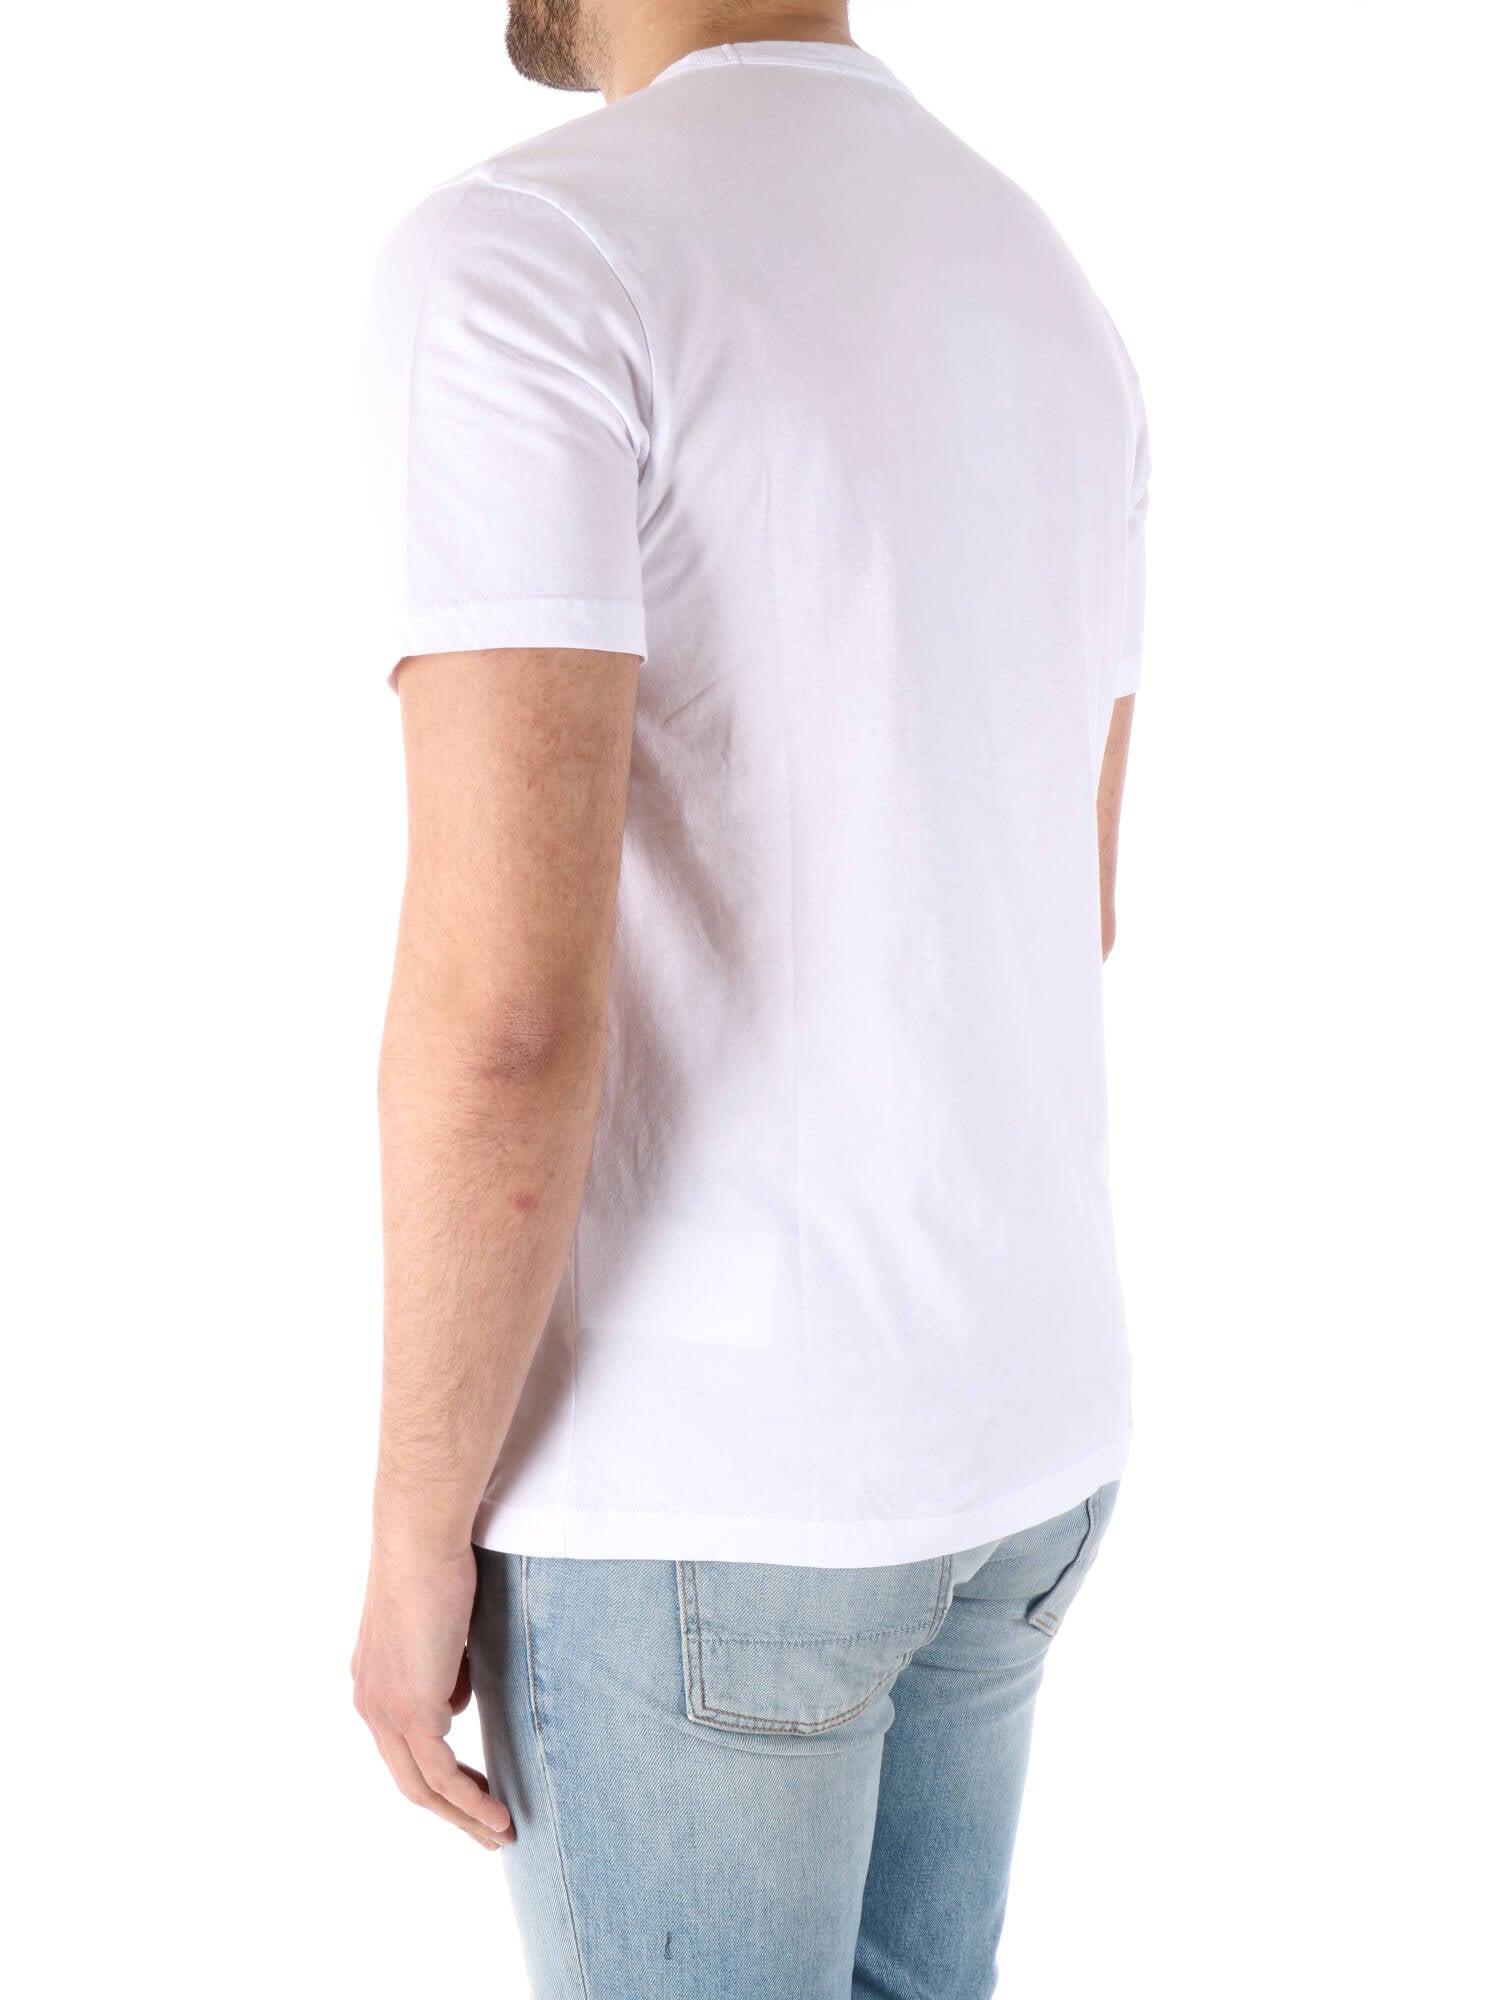 Woolrich t-shirt uomo bianca con logo